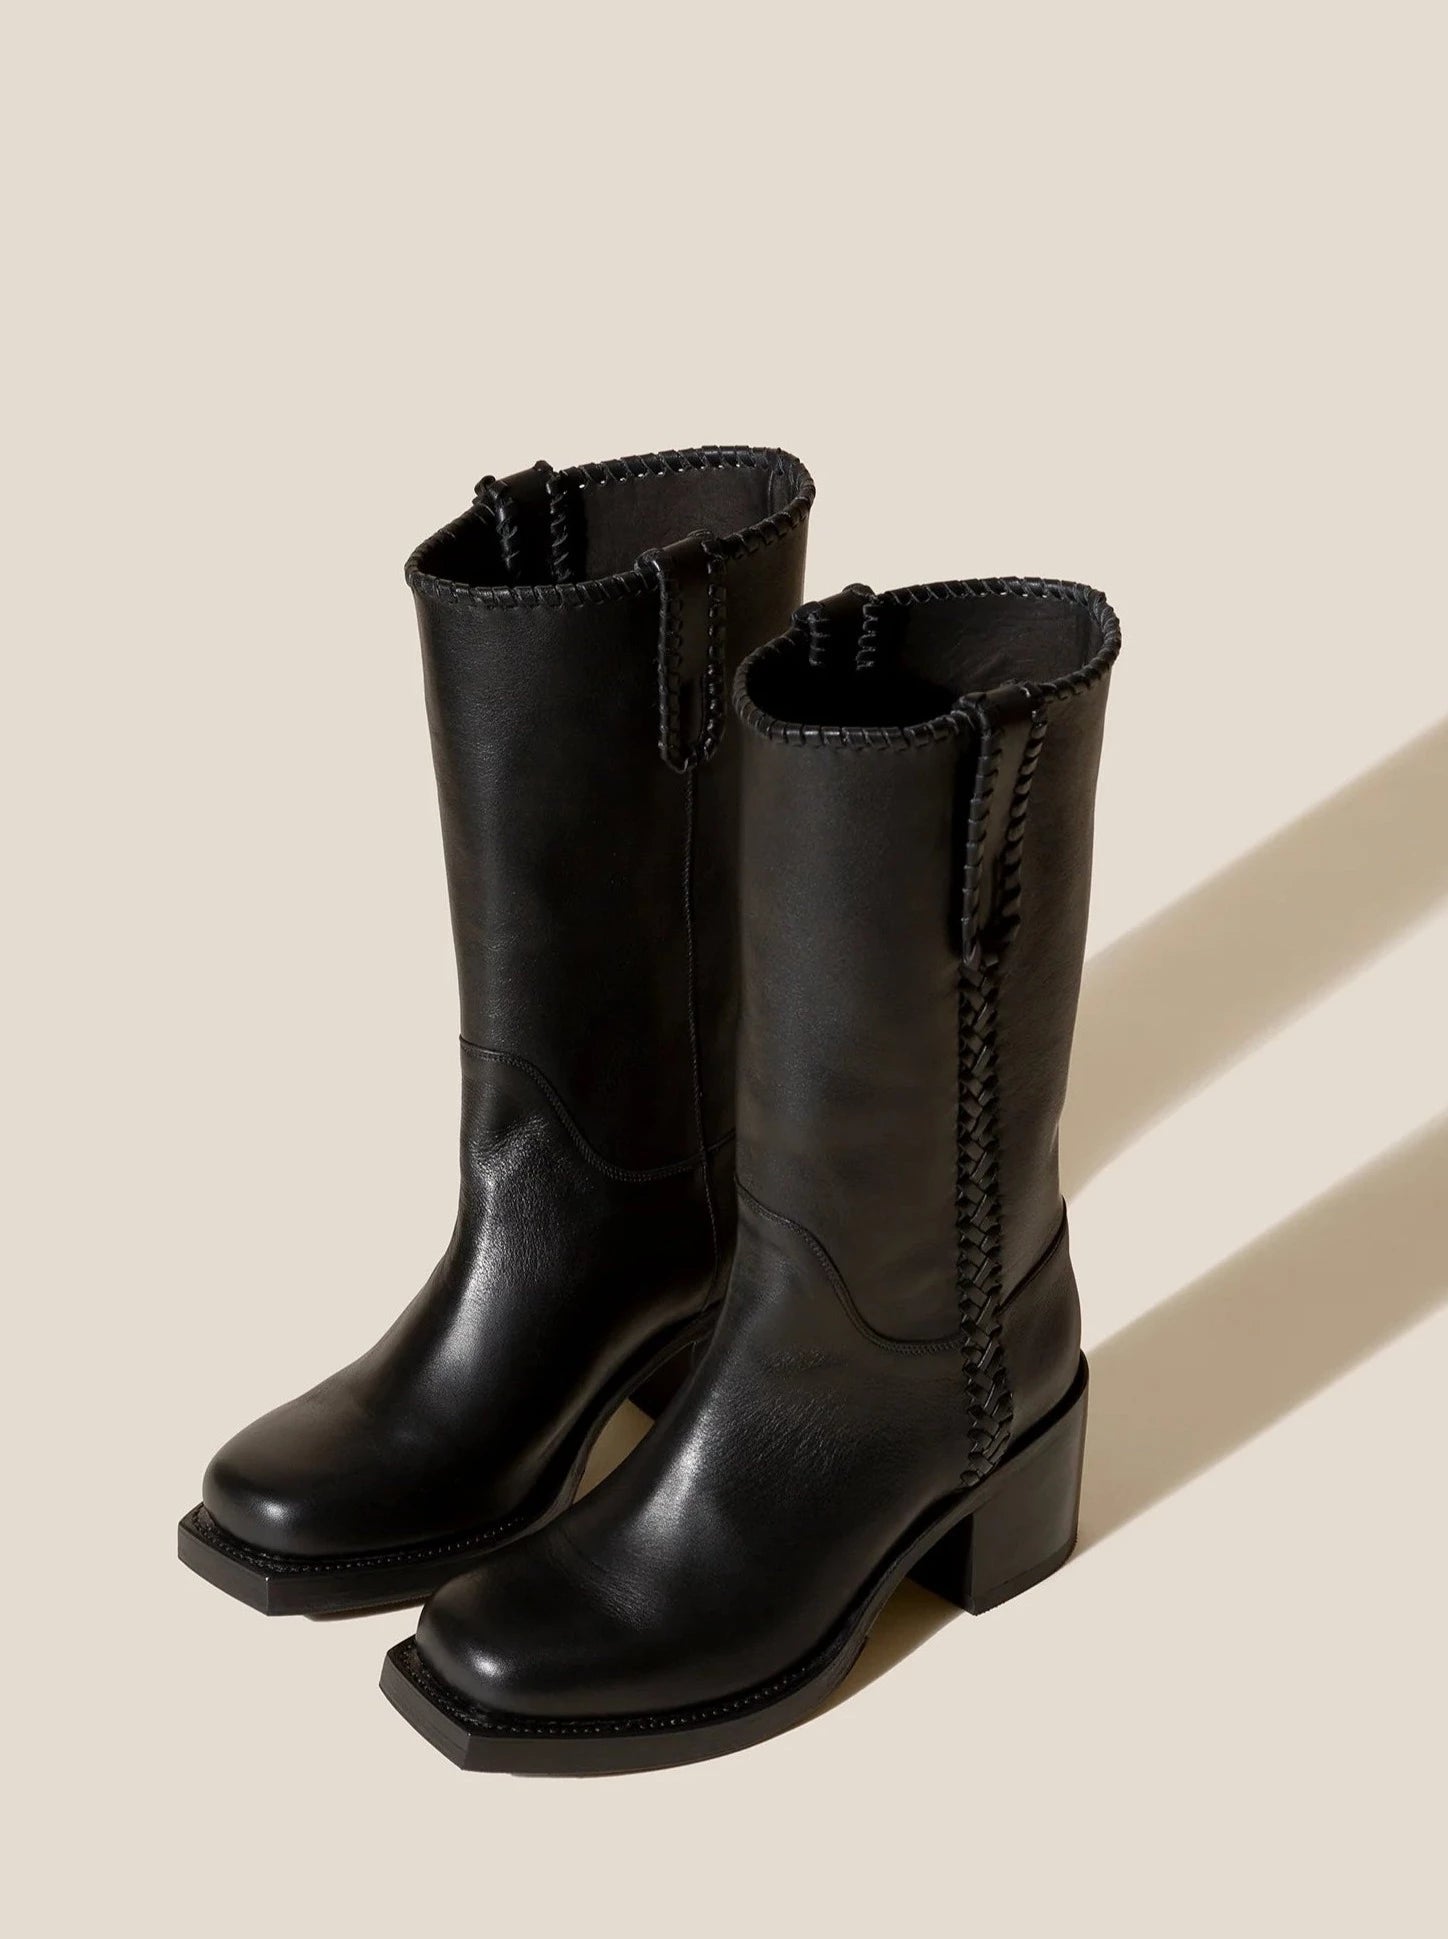 Aumandra boots, black